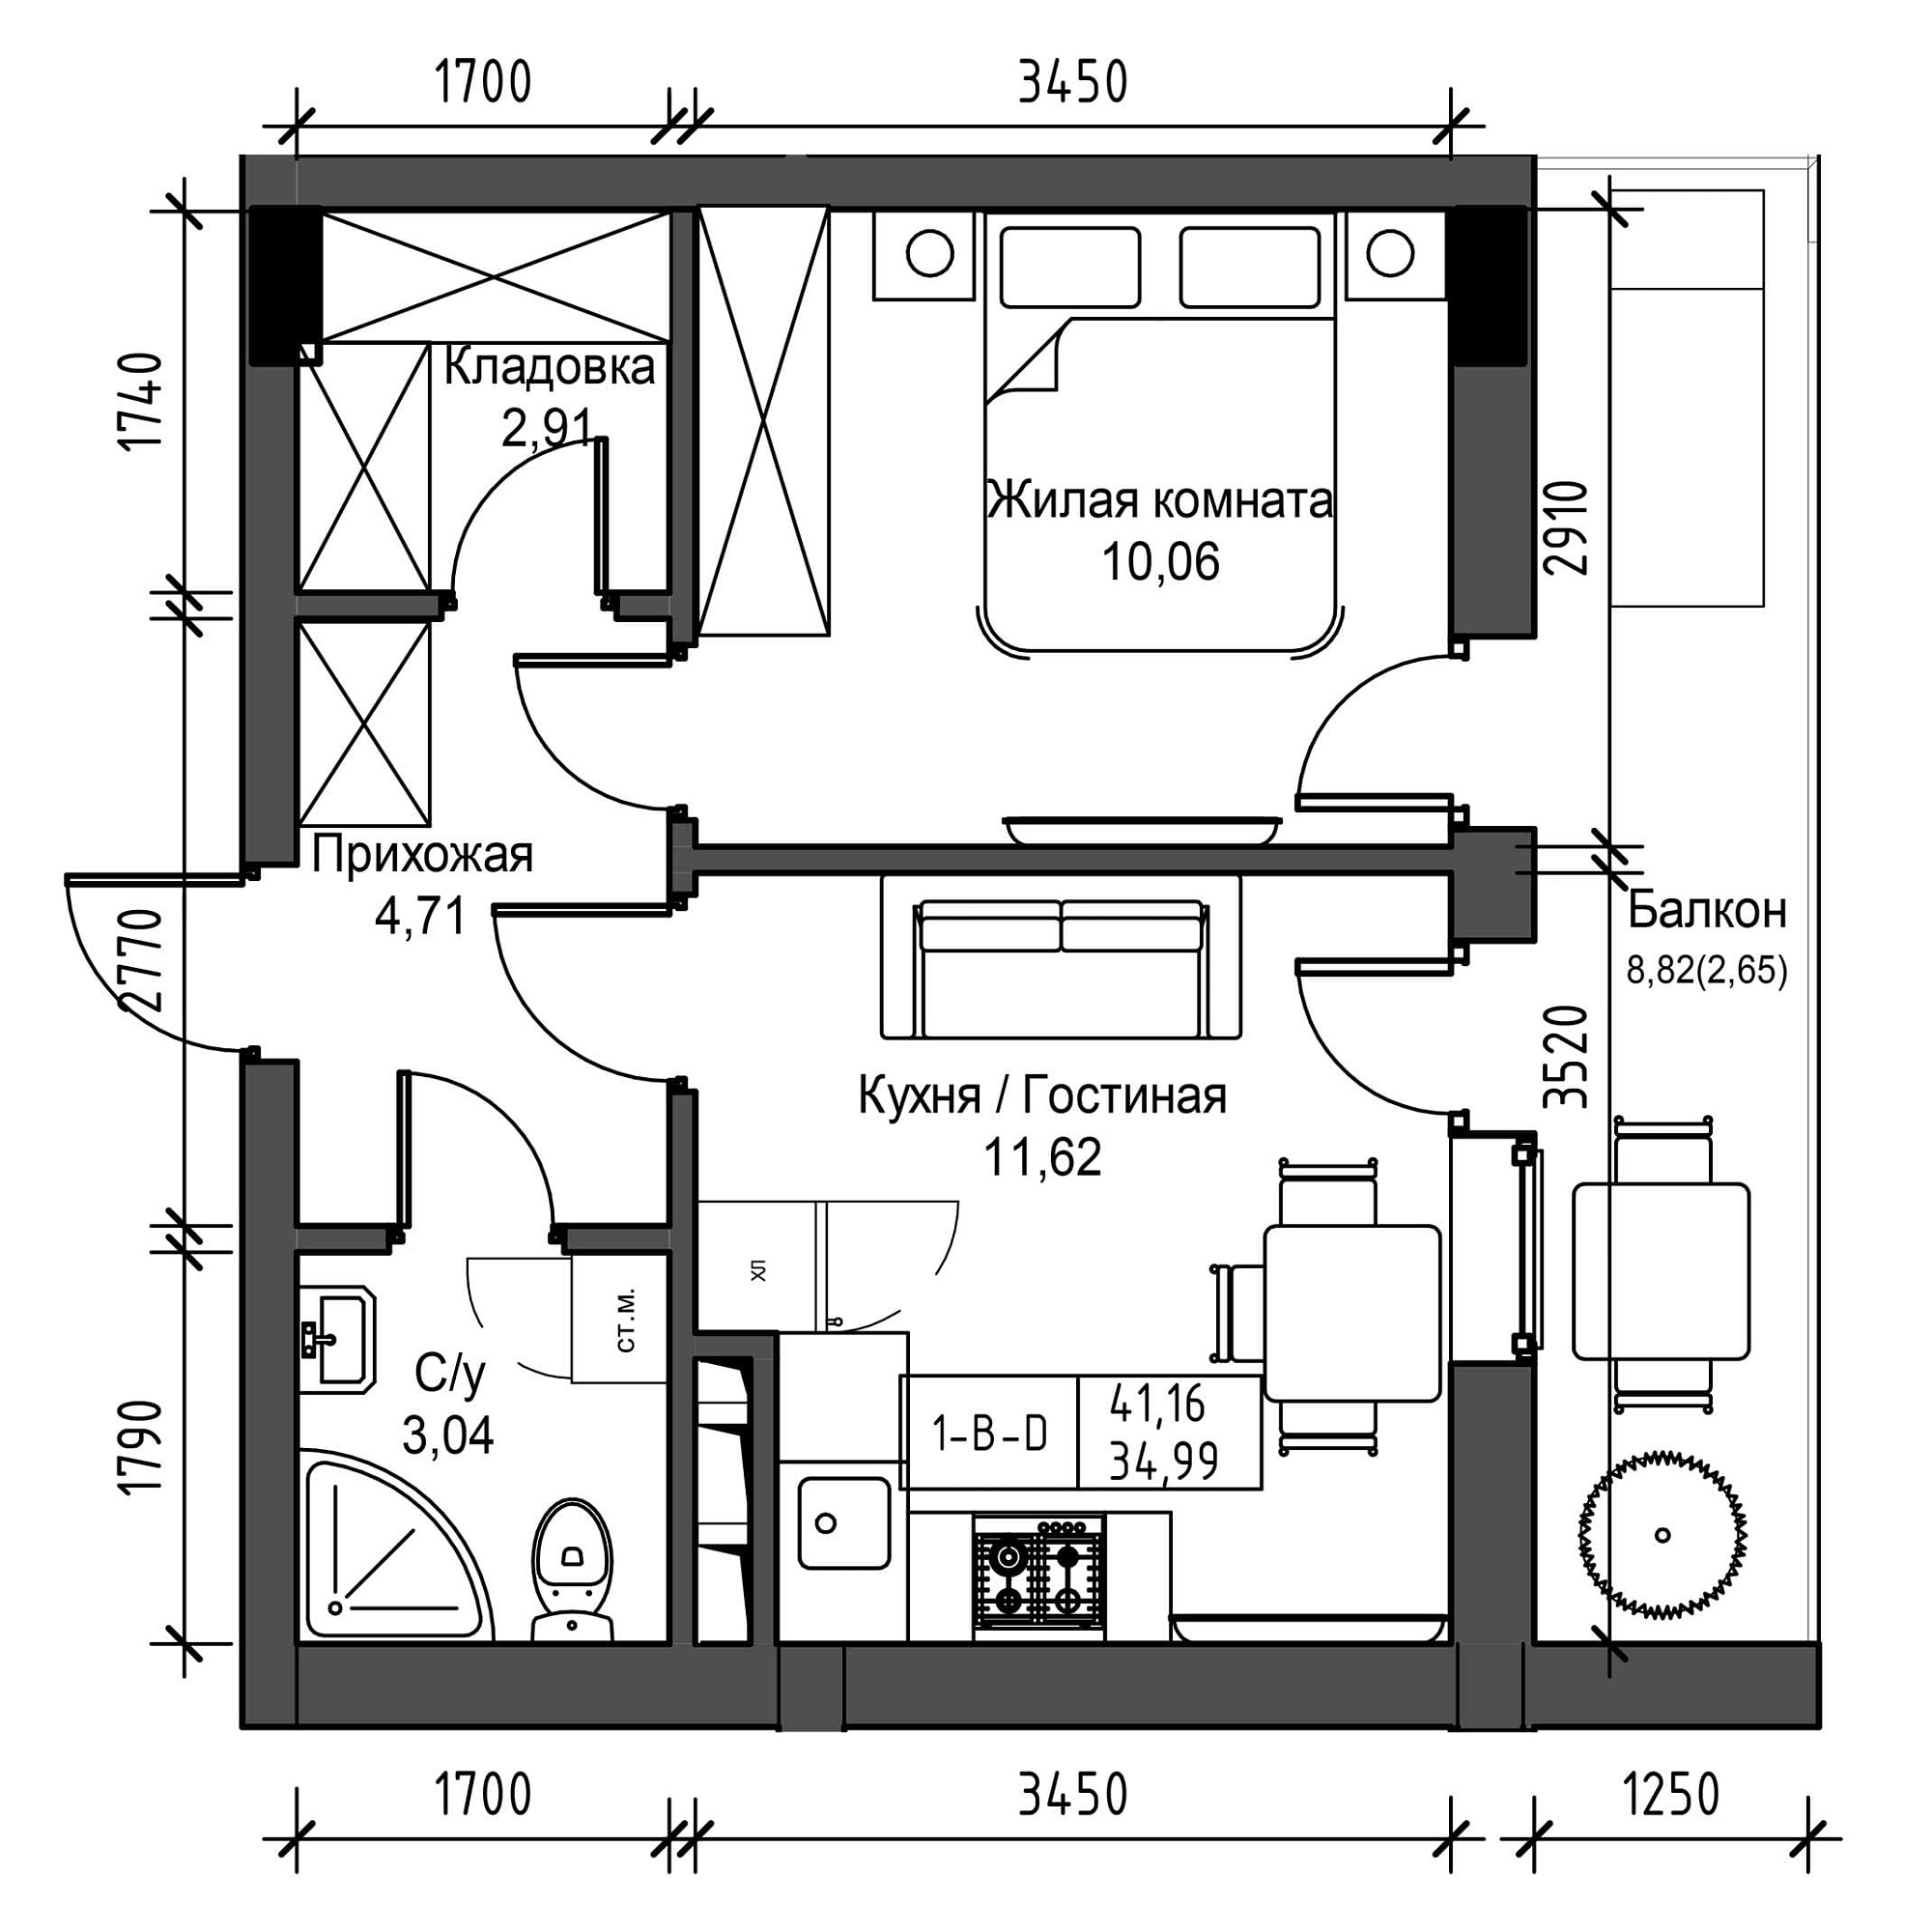 Планування 1-к квартира площею 34.99м2, UM-001-05/0024.